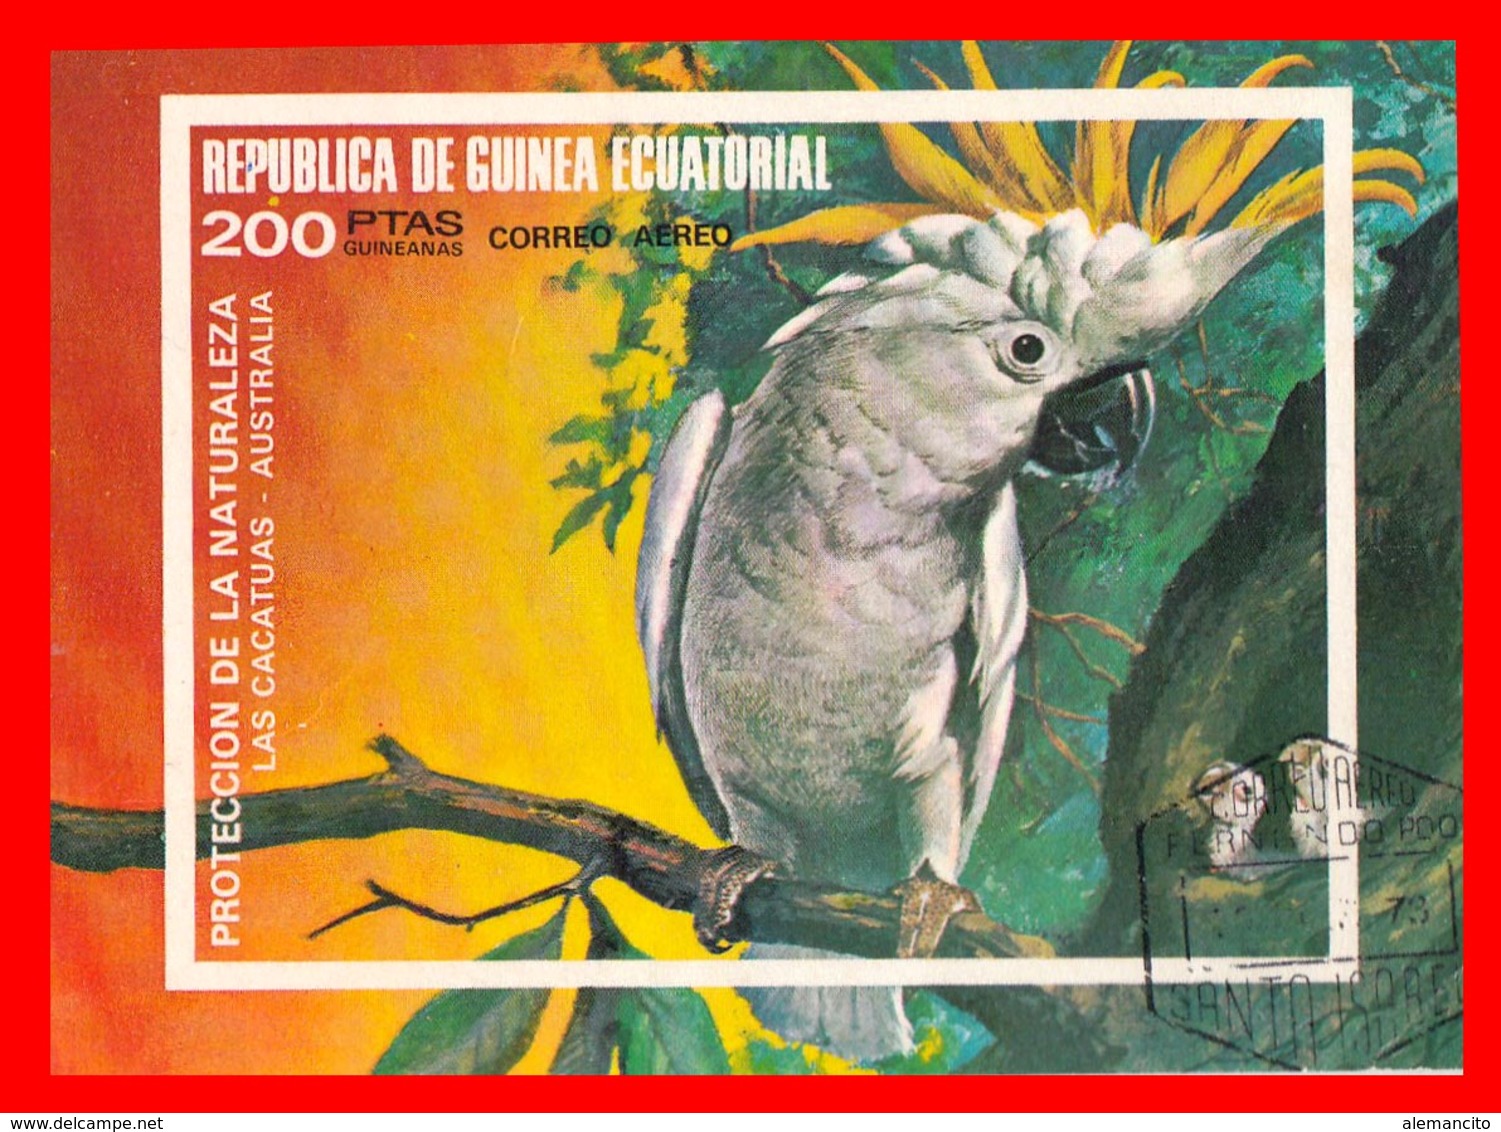 GUINEA ECUATORIAL - 1976 - PROTECCION DE LA NATURALEZA – TEMATICA  AVES - Guinea Ecuatorial